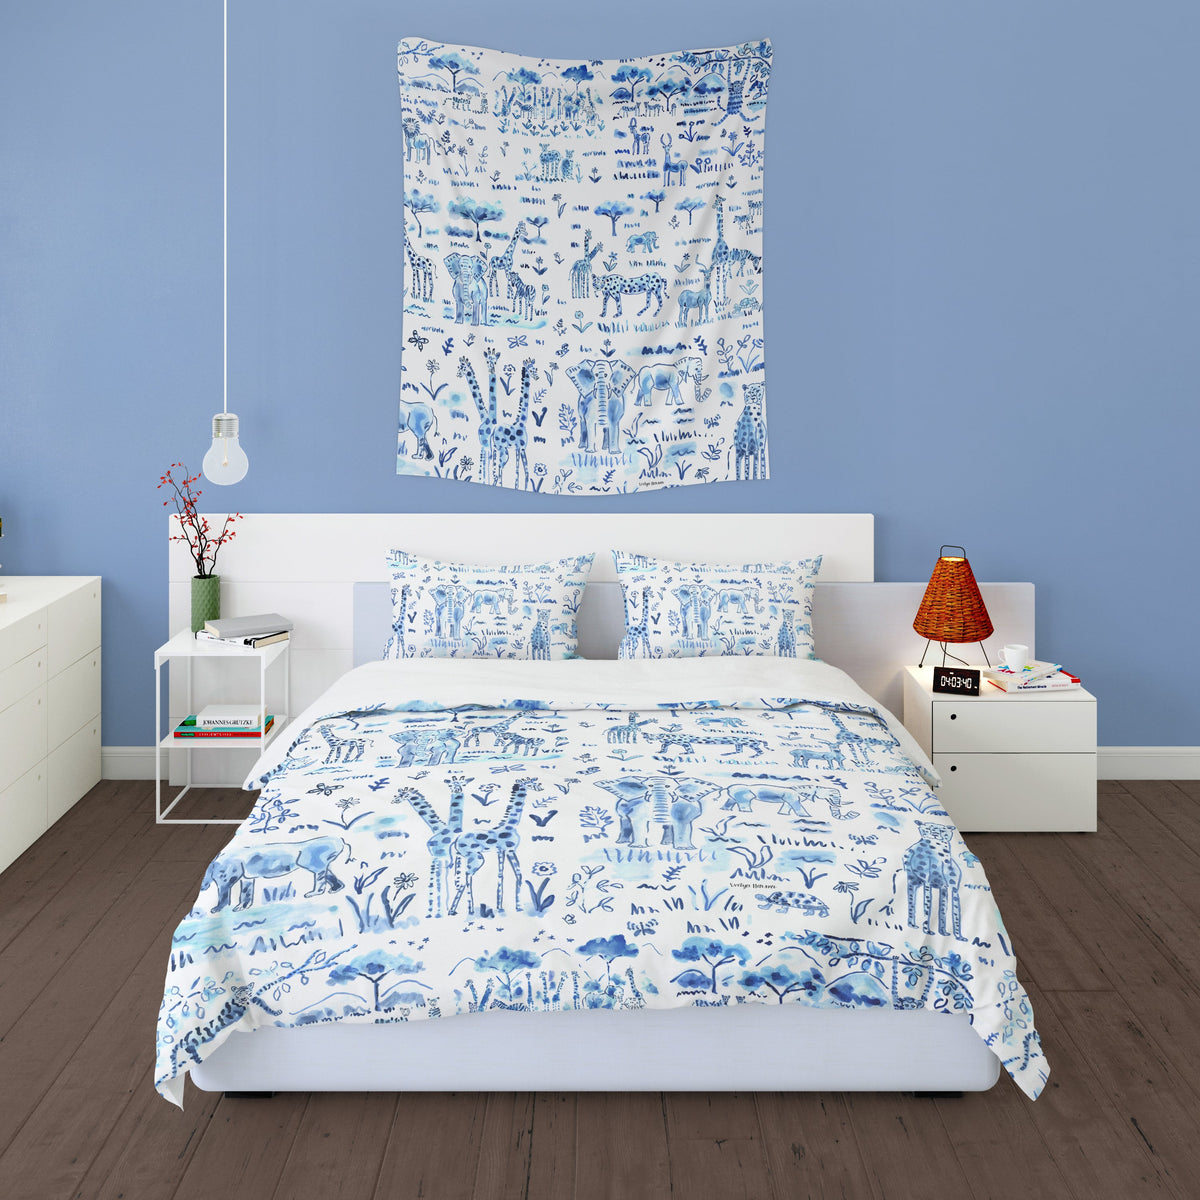 Duvet - Animalia Blue Bedding, Duvets MWW Full/Queen 